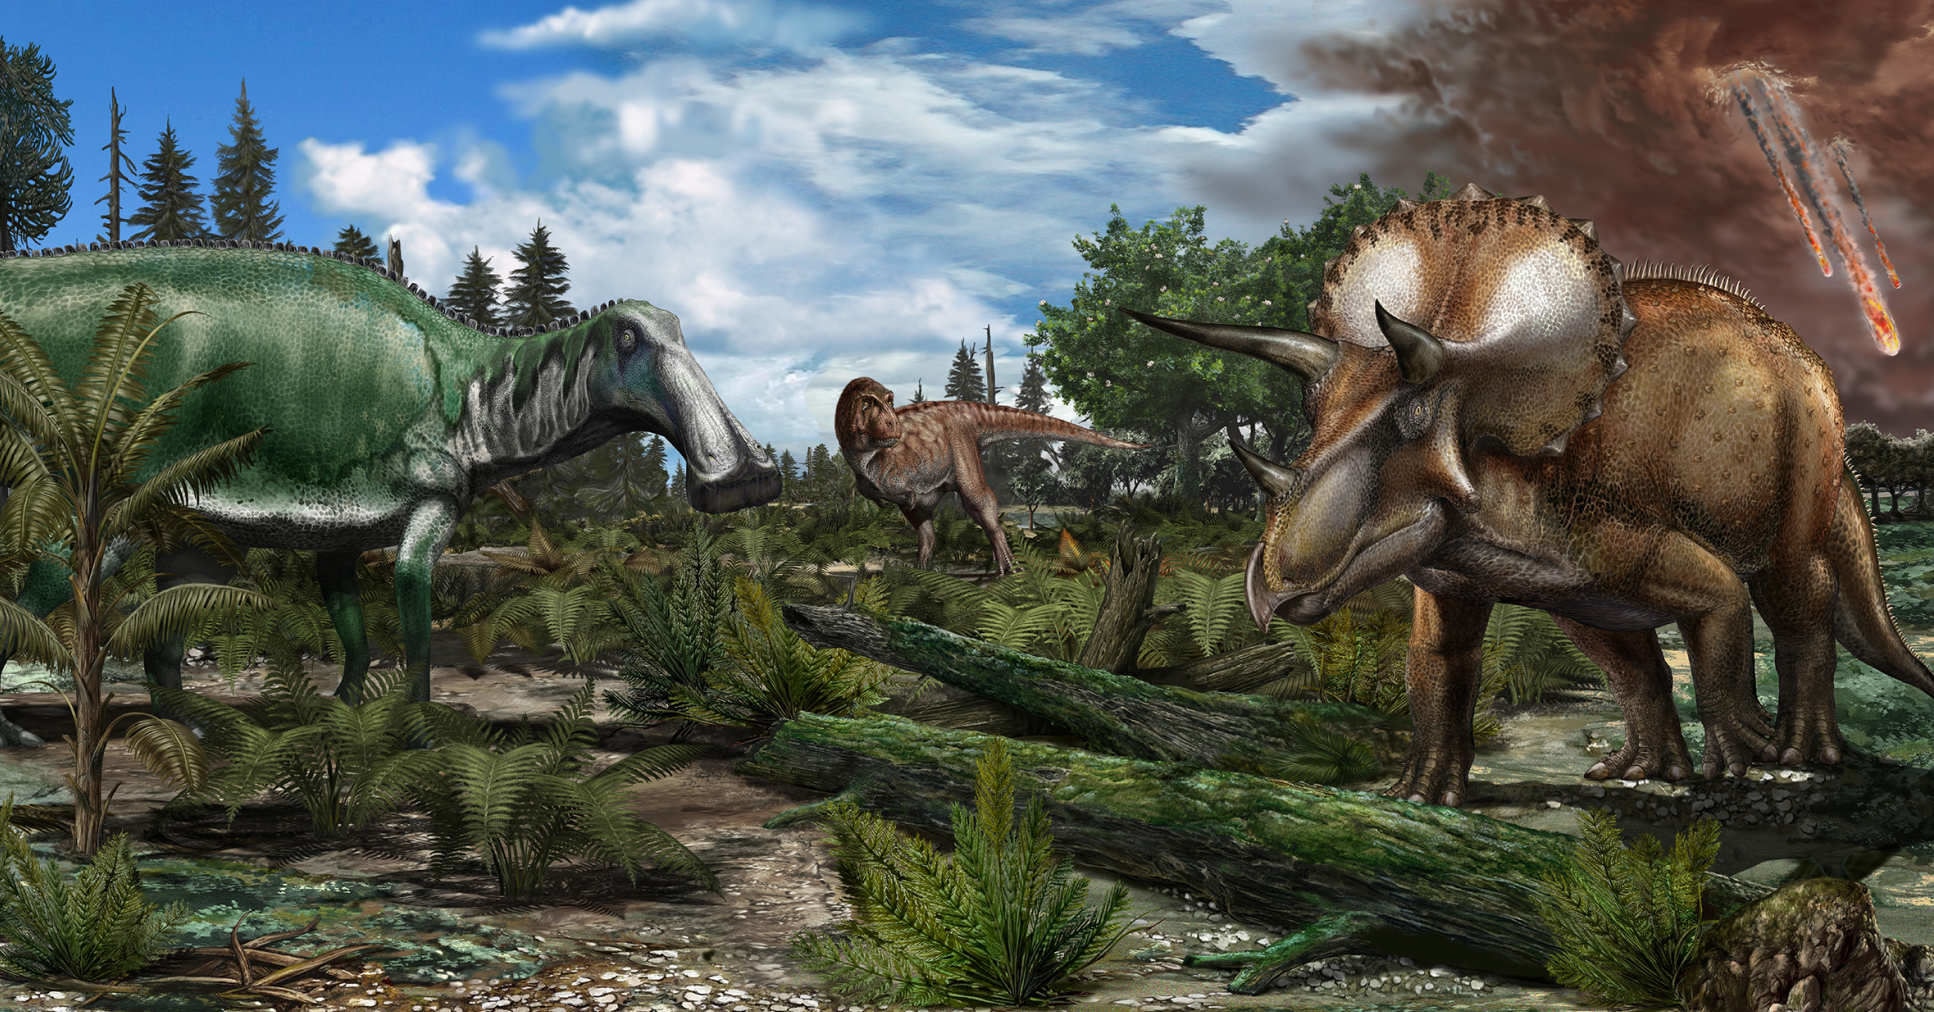 Artwork depicting the last day of the Cretaceous Period. Credit: Davide Bonadonna via Imperial College London